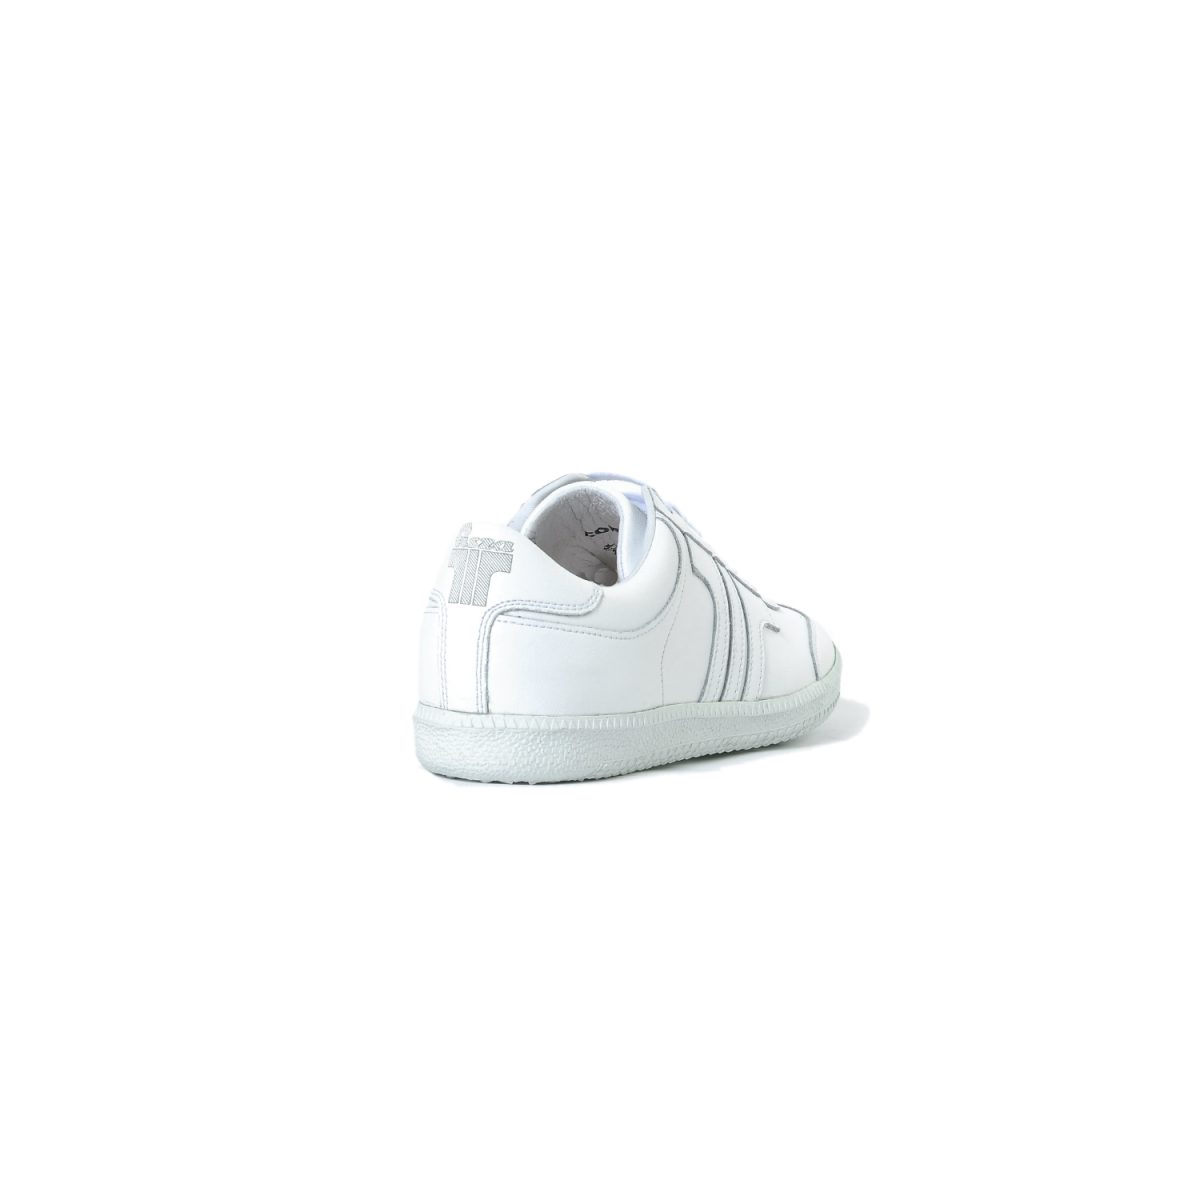 Tisza cipő - Compakt - Fehér